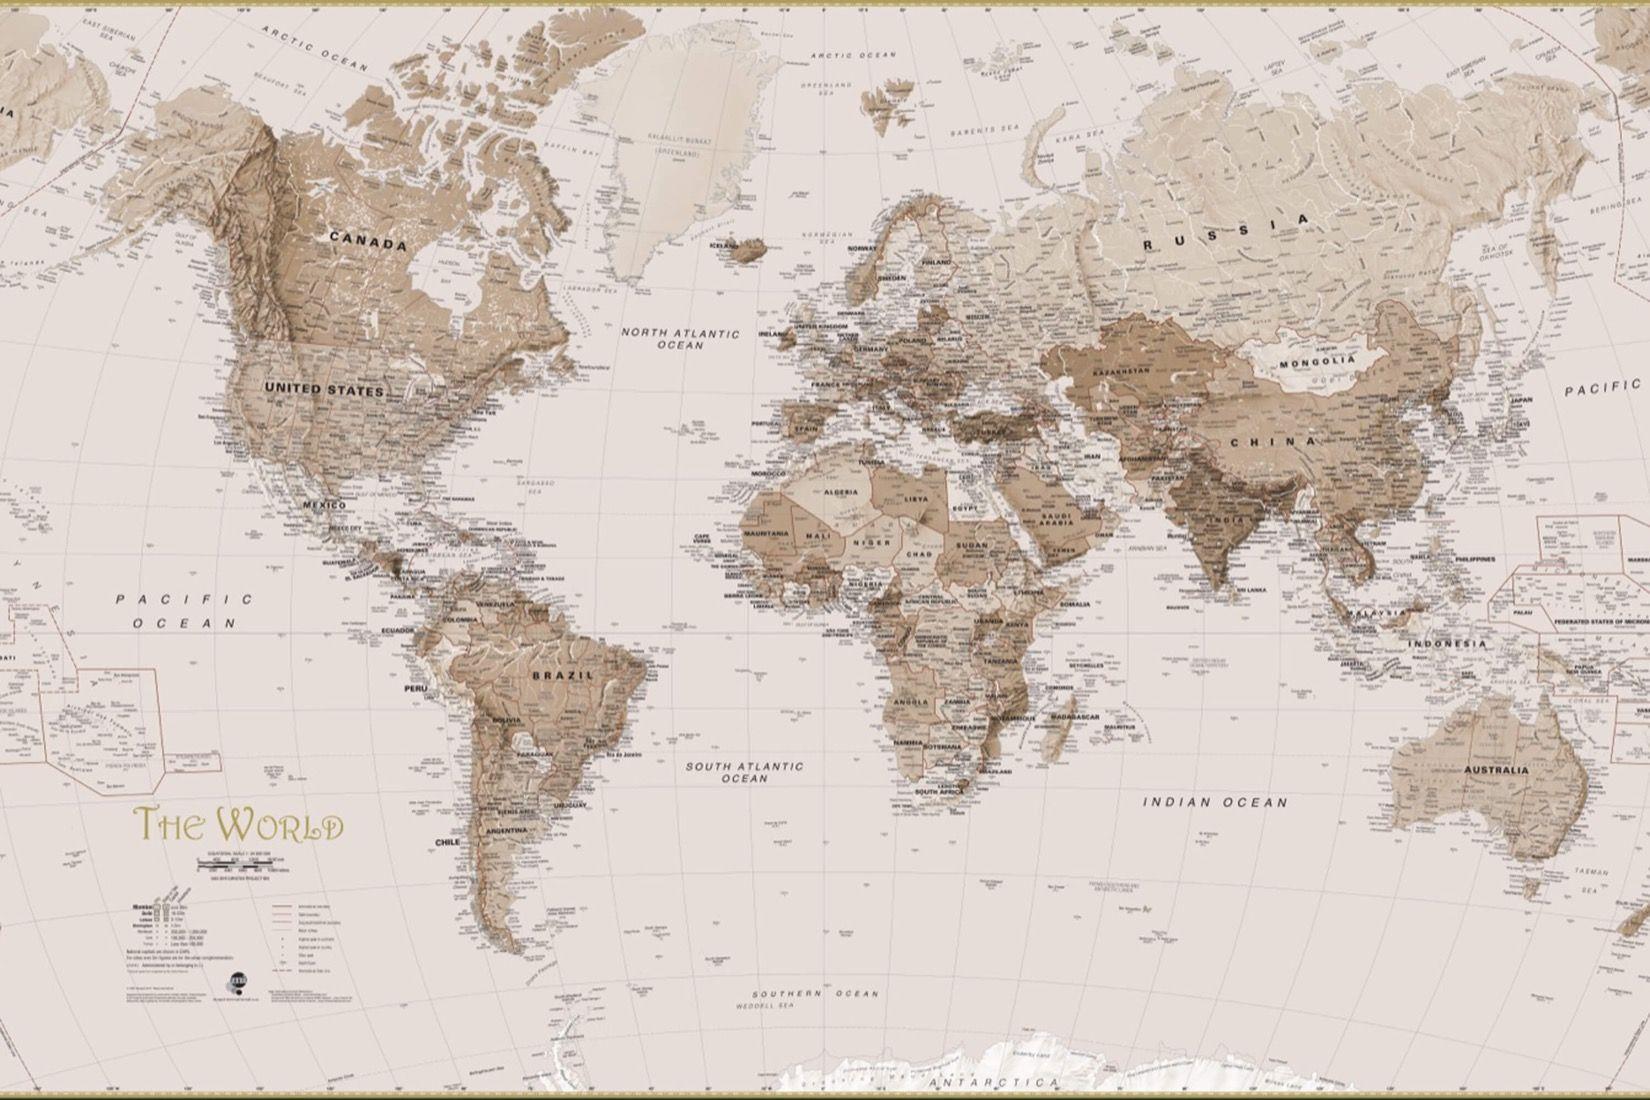 Earth Tone World Map Mural Wallpaper